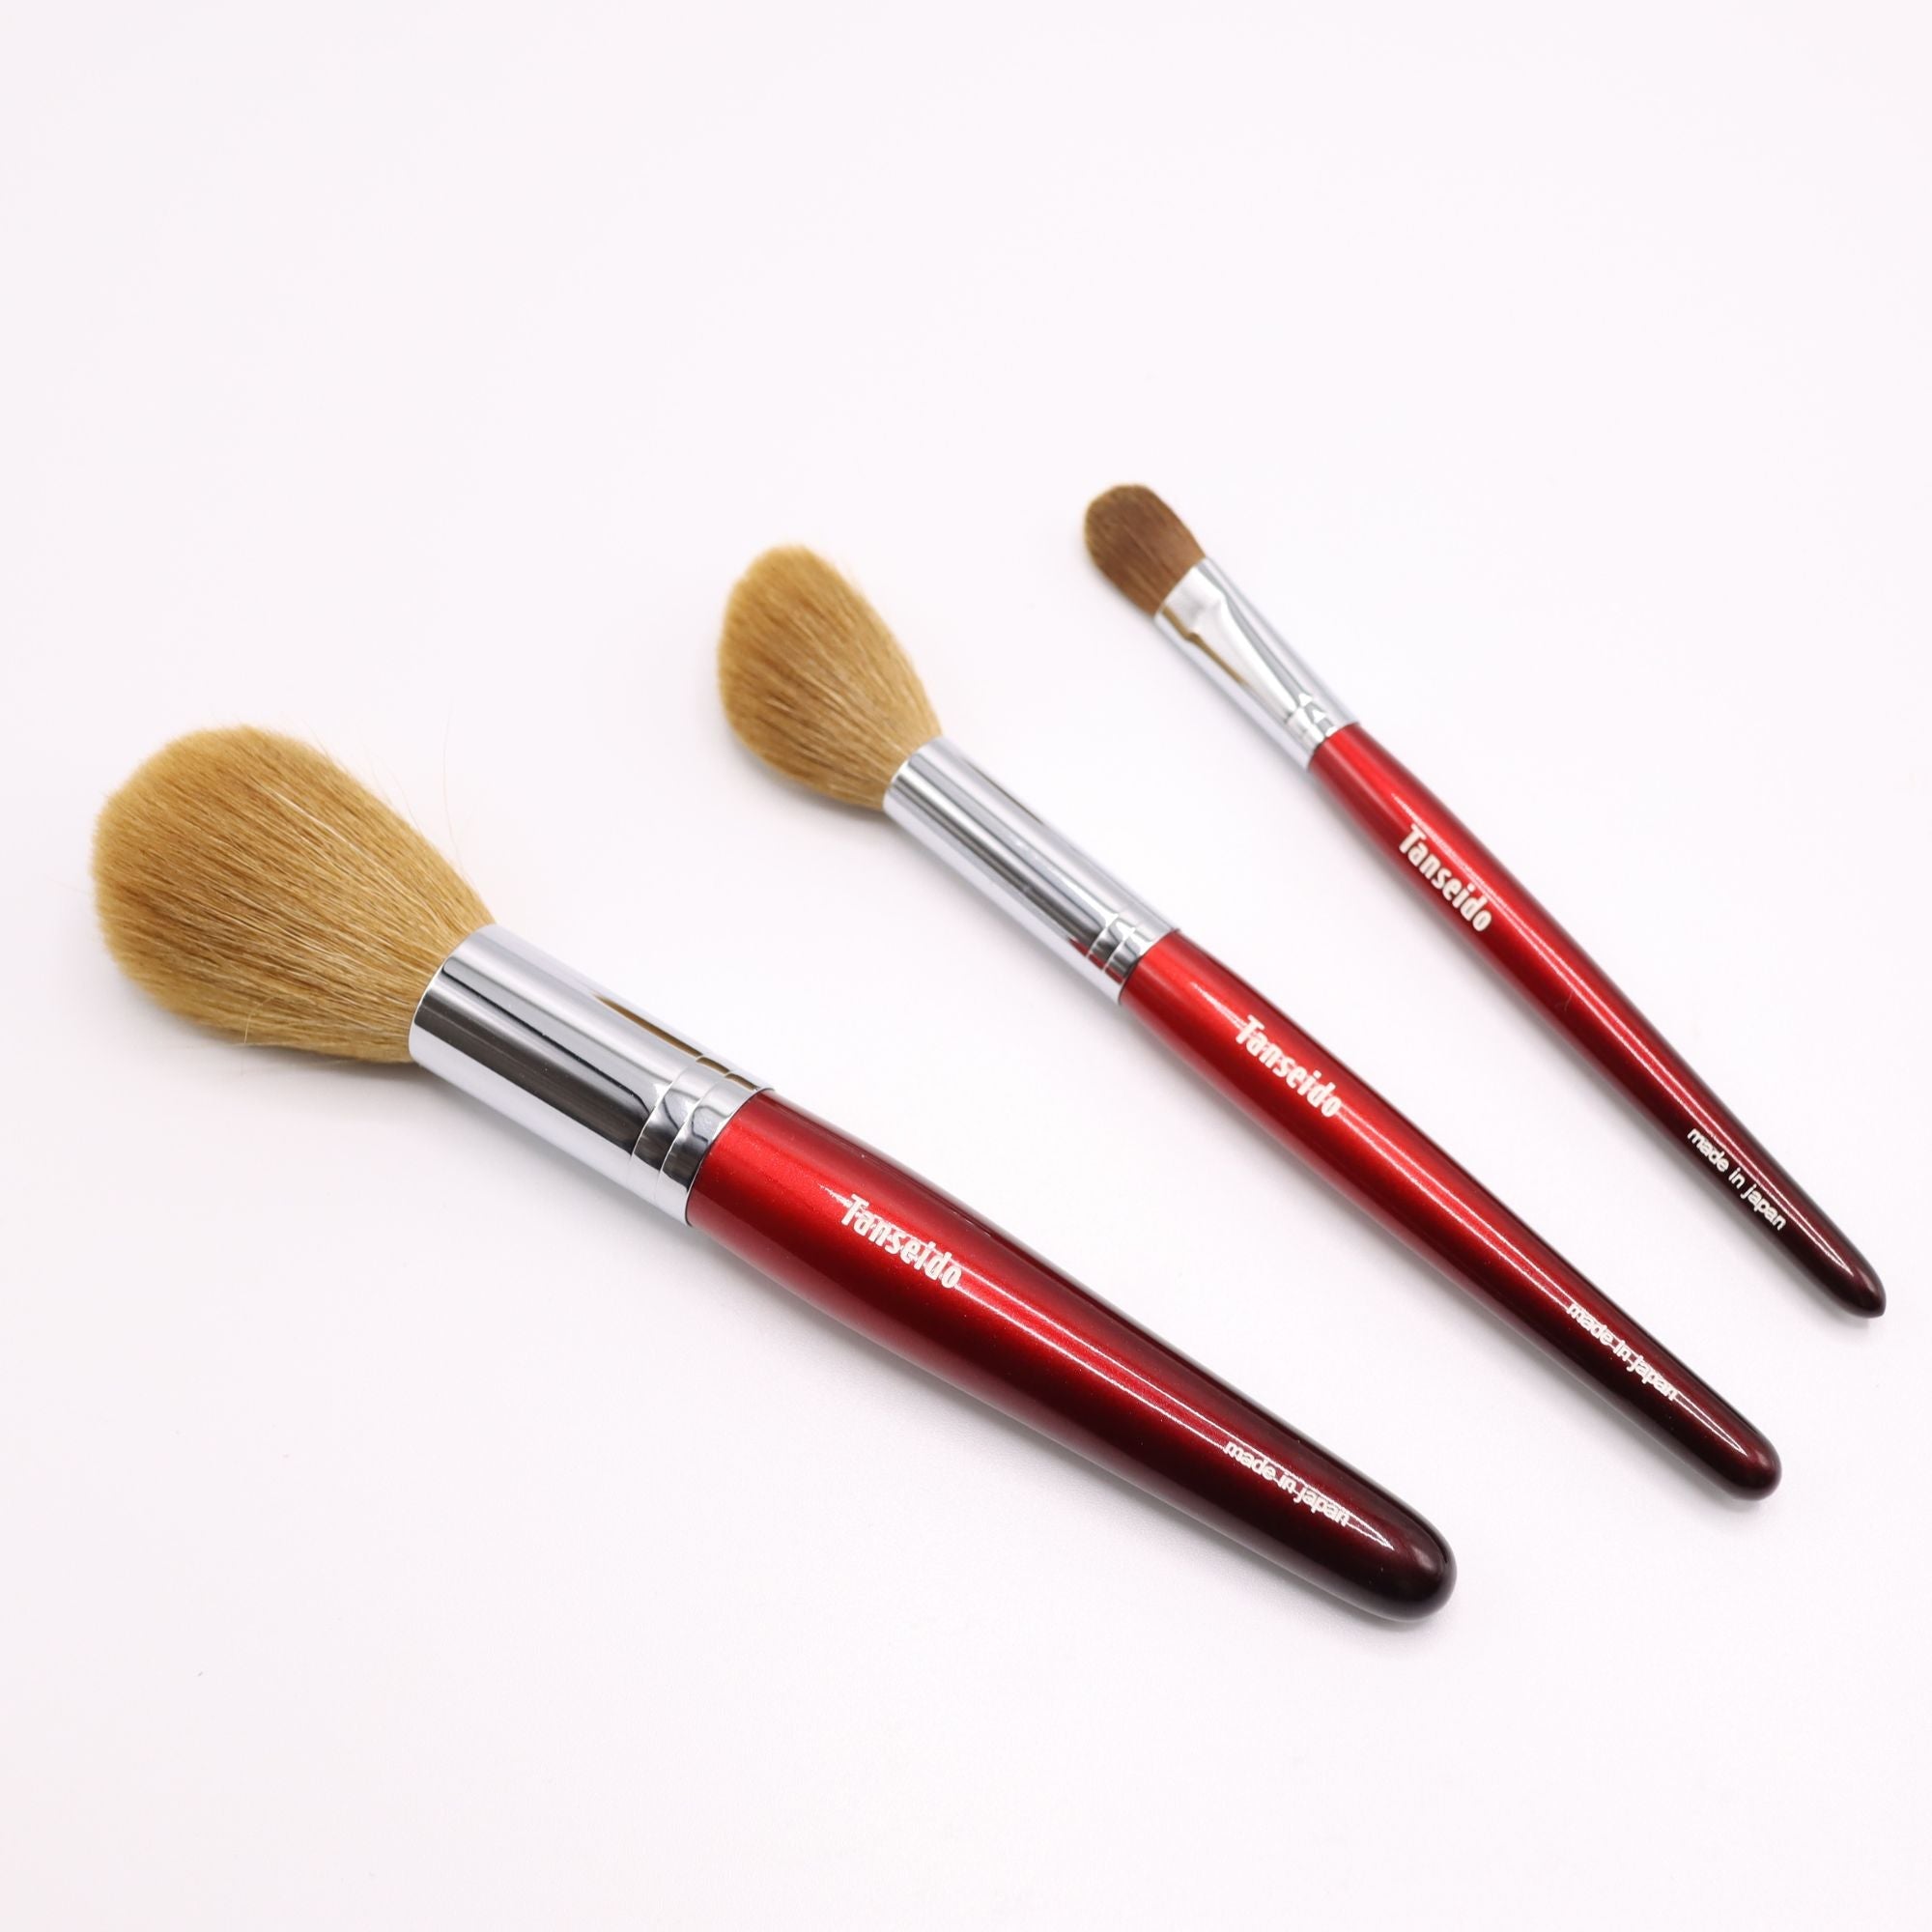 Tanseido AKA 赤 Series WS14T Highlight Brush (Regular Collection) - Fude Beauty, Japanese Makeup Brushes